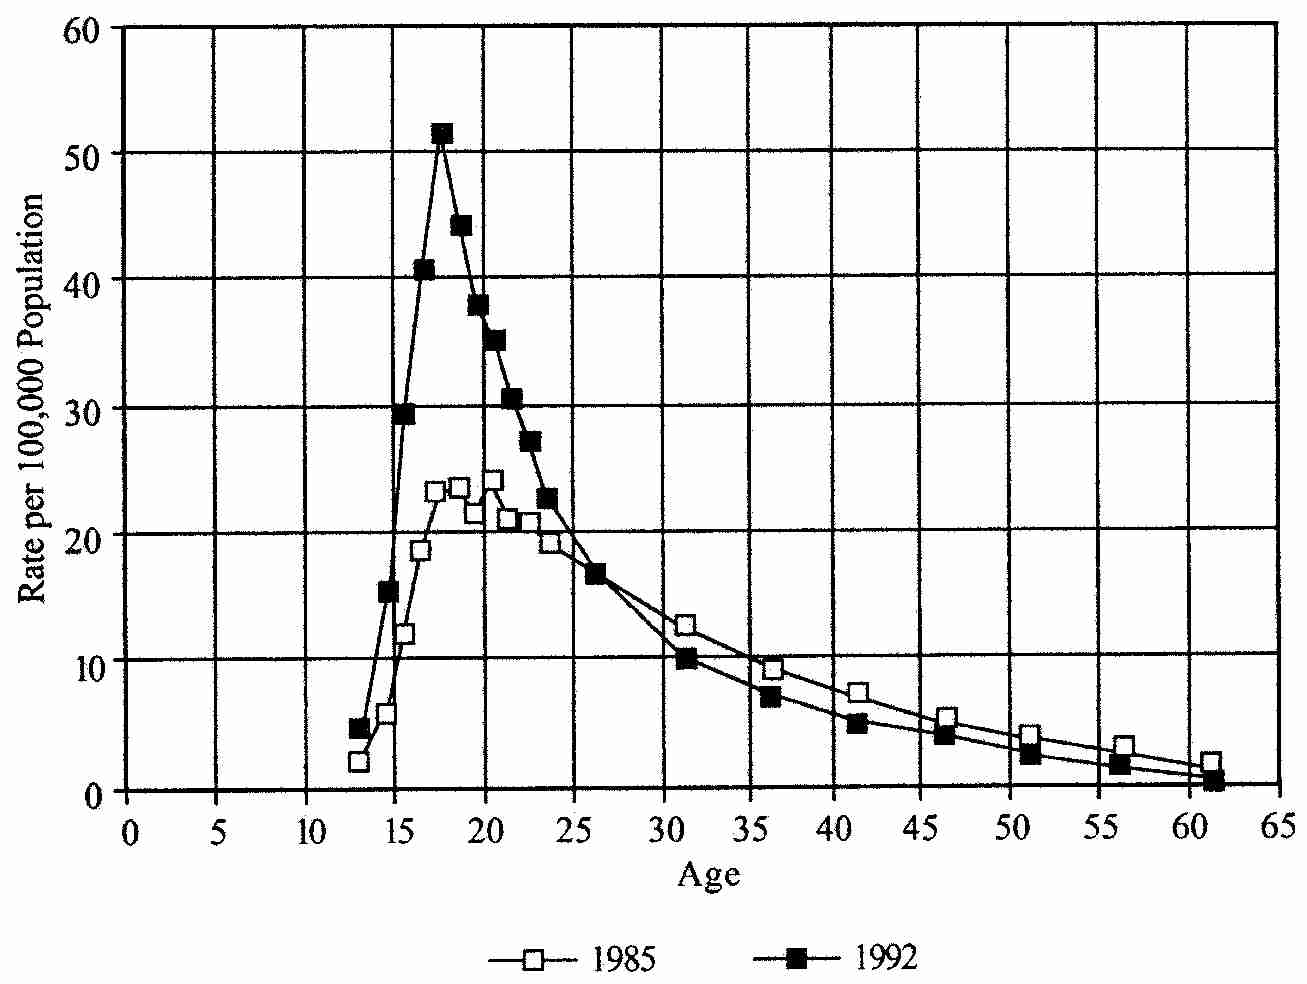 Murder arrest-rate age, 1985/1992, USA  